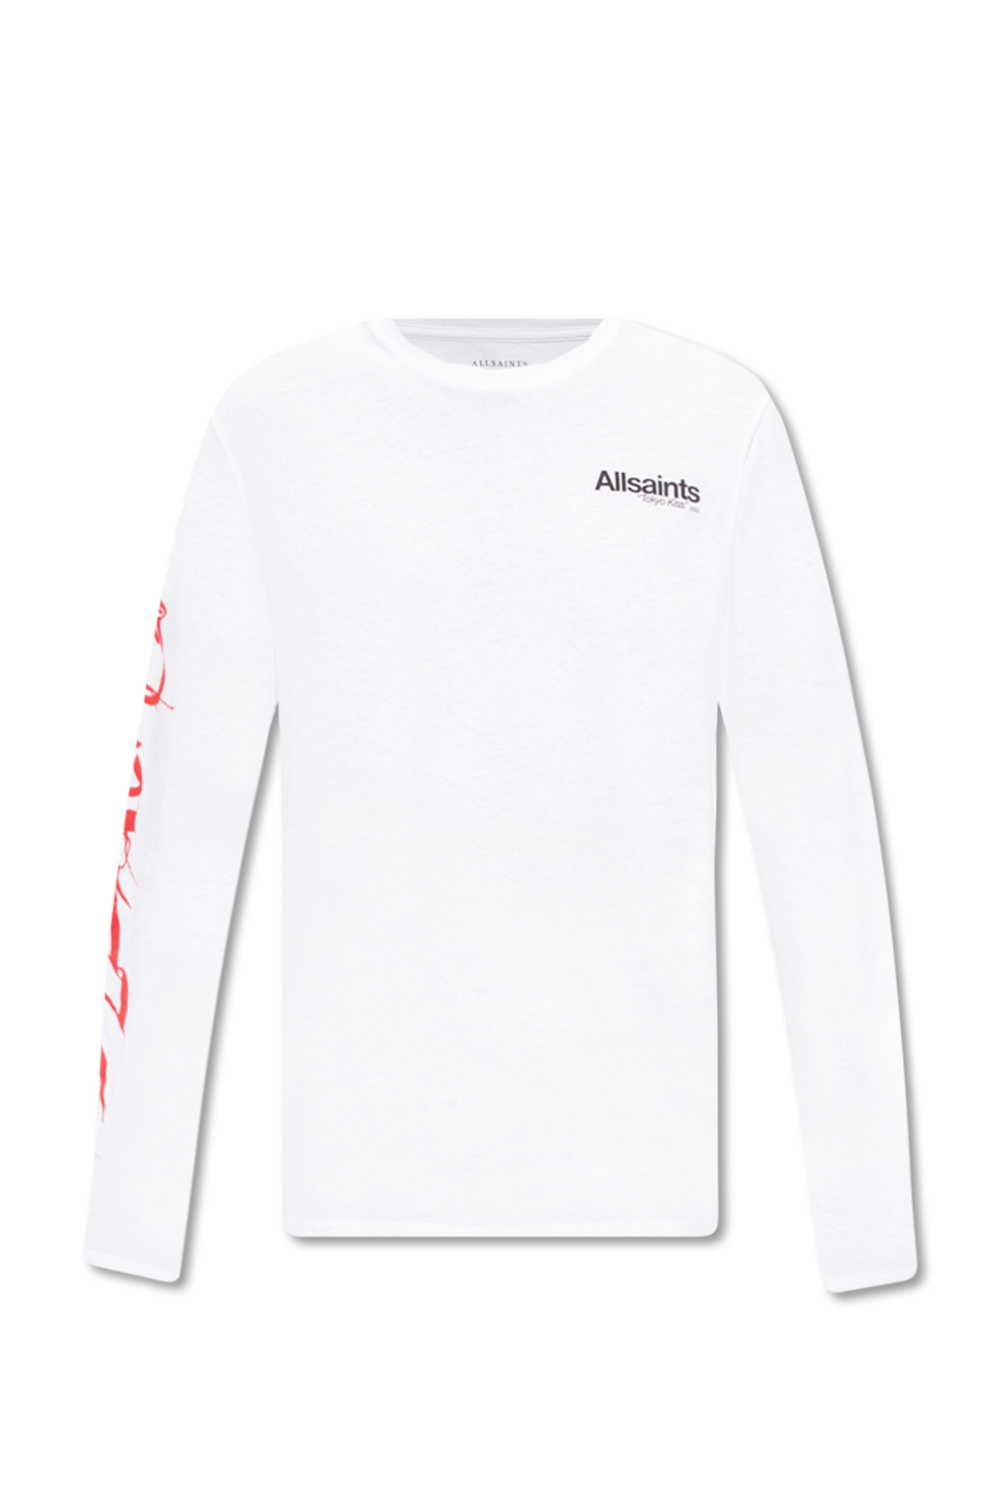 AllSaints ‘Silver’ long-sleeved T-shirt